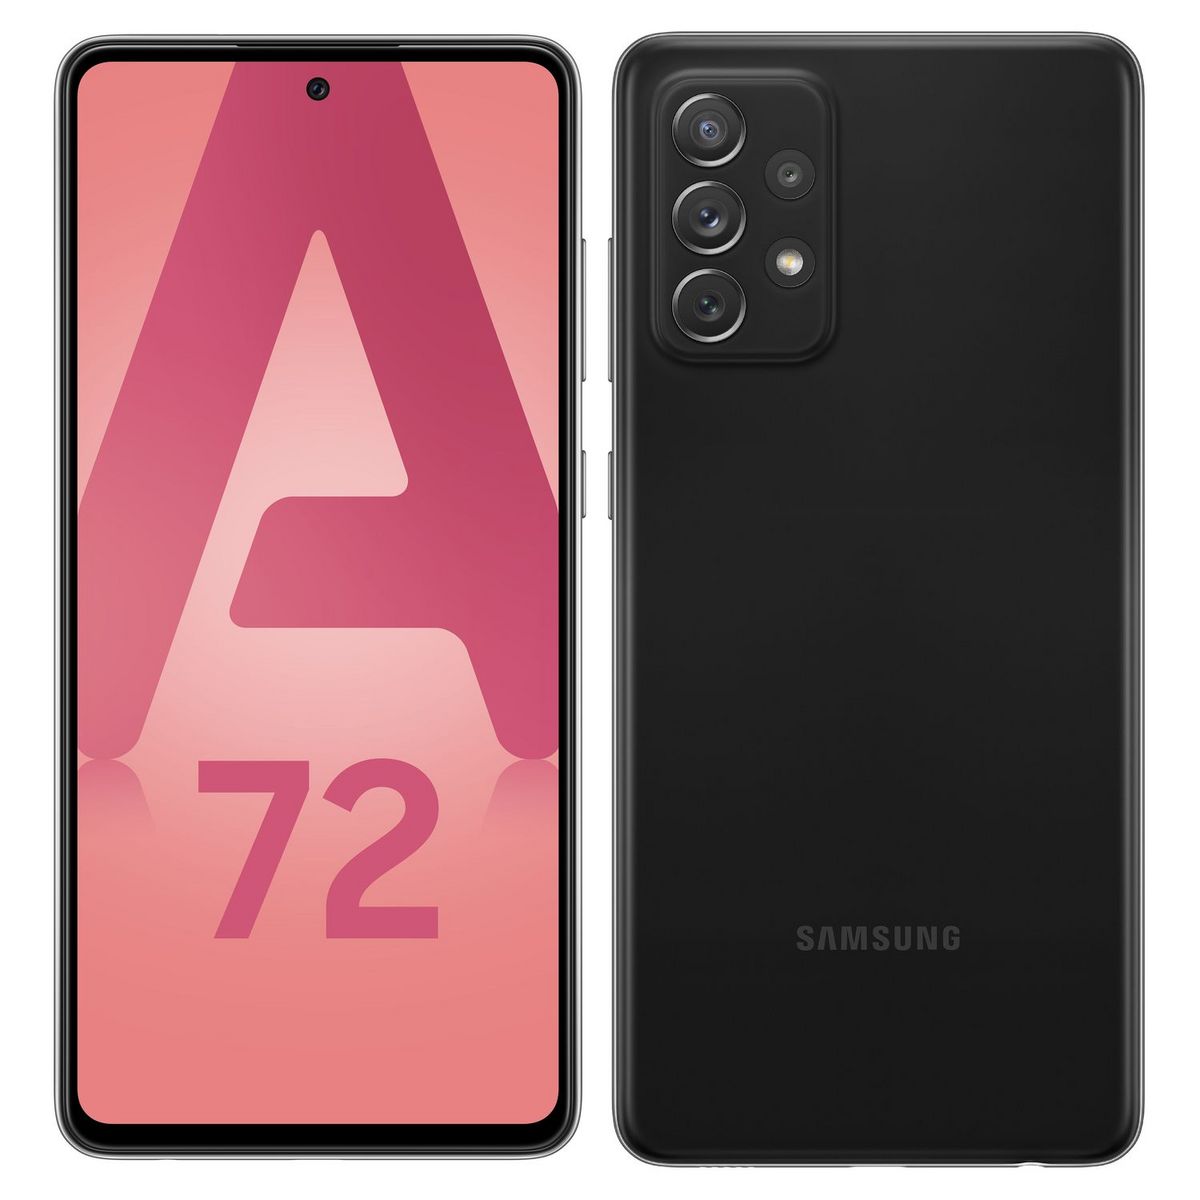 Smartphone Samsung GALAXY A72 Noir 128go